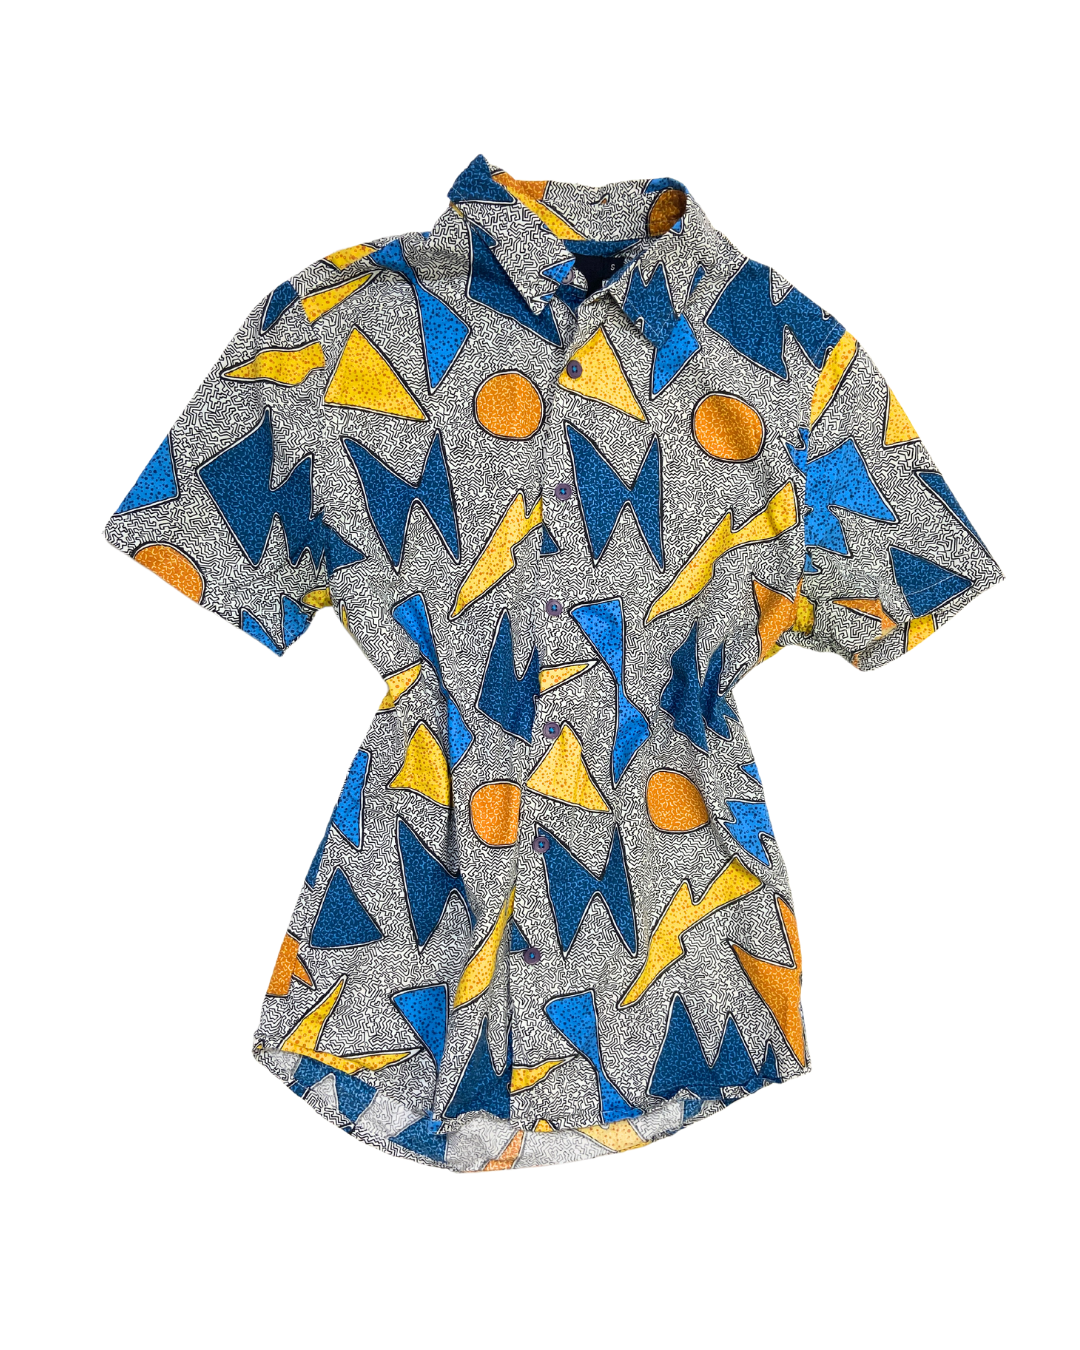 Abstract Geometric Print Shirt